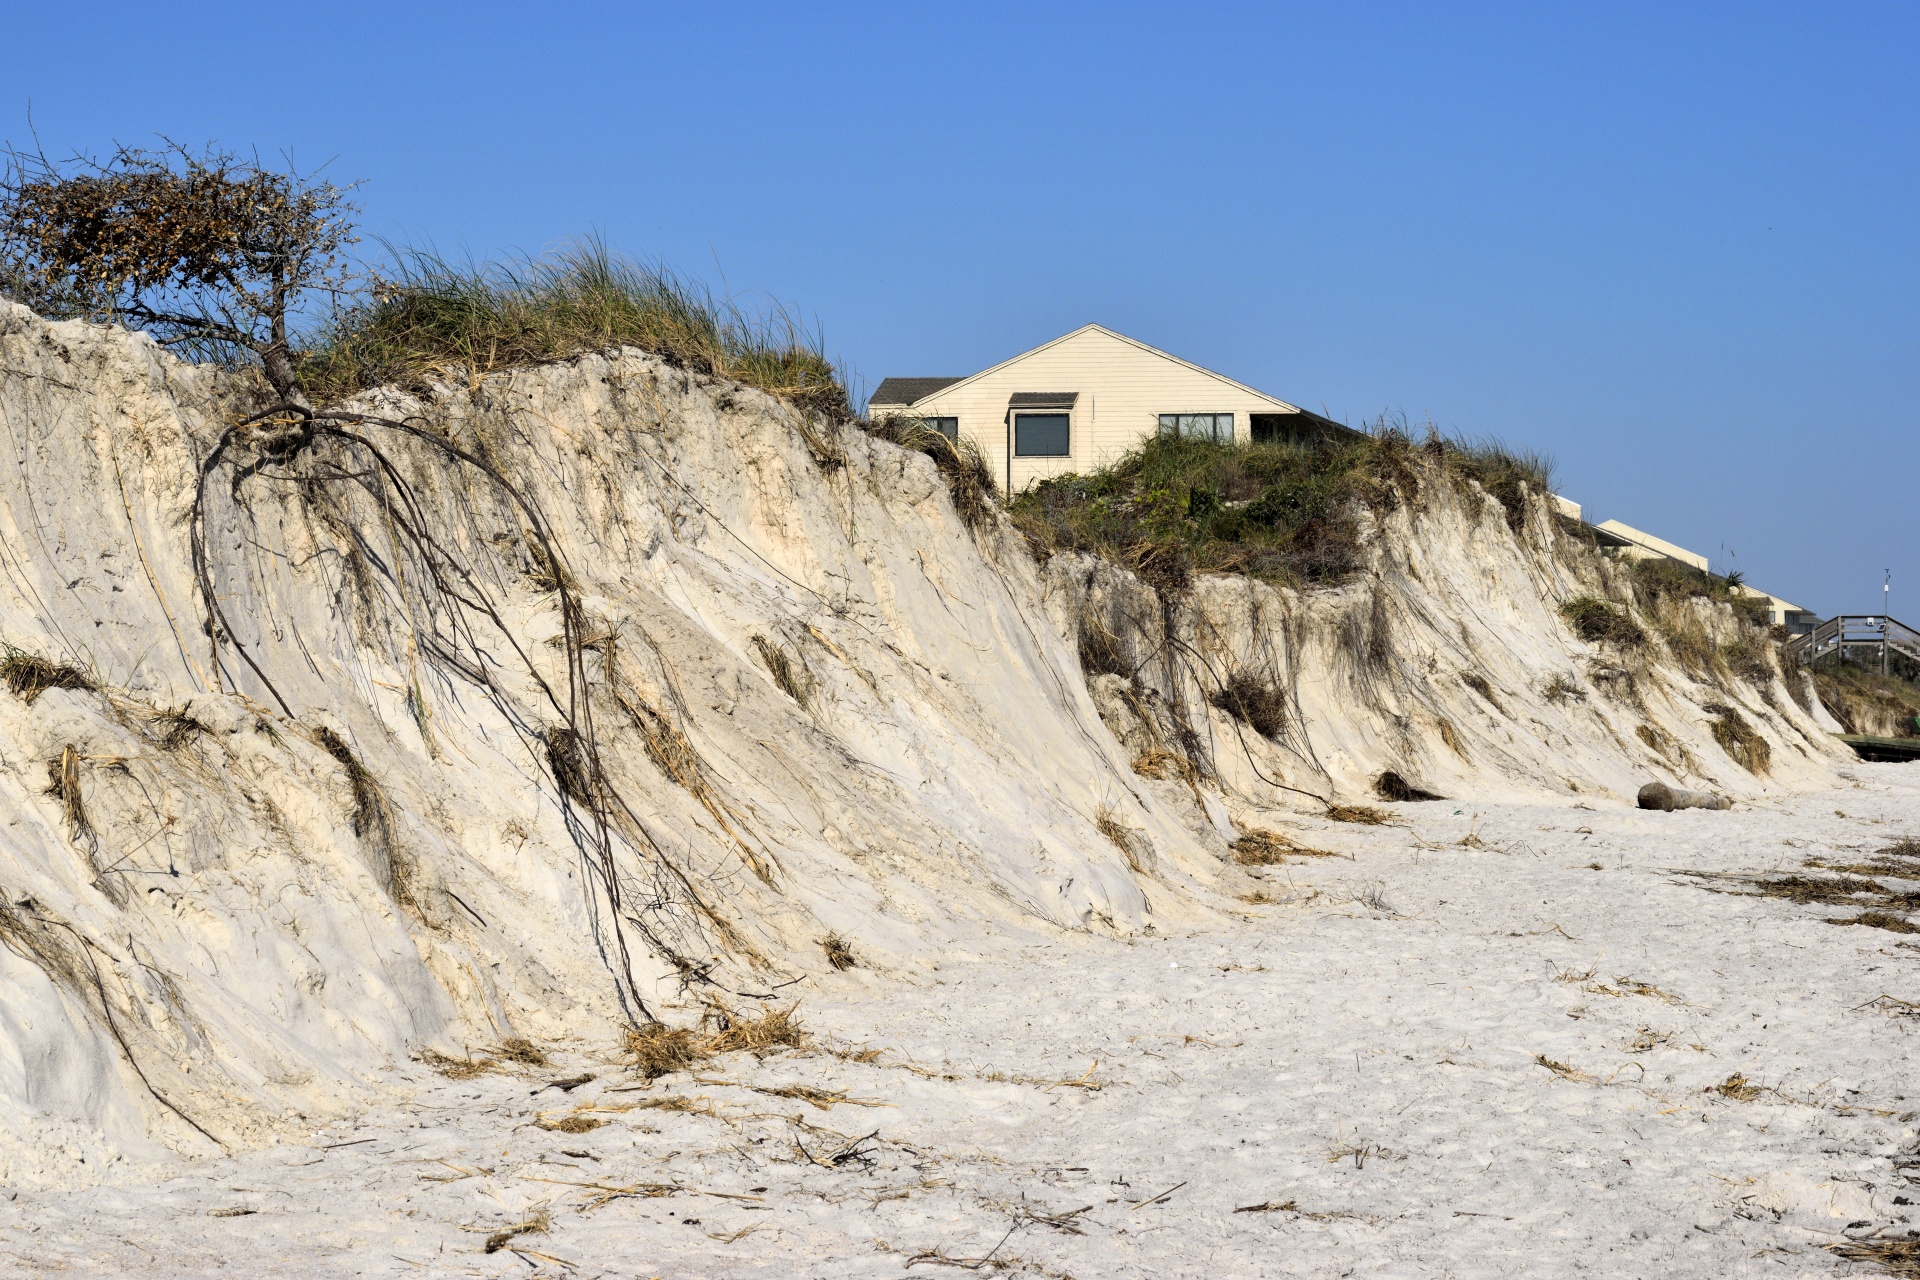 Beach erosion caused by hurricane Matthew near St. Augustine, Florida